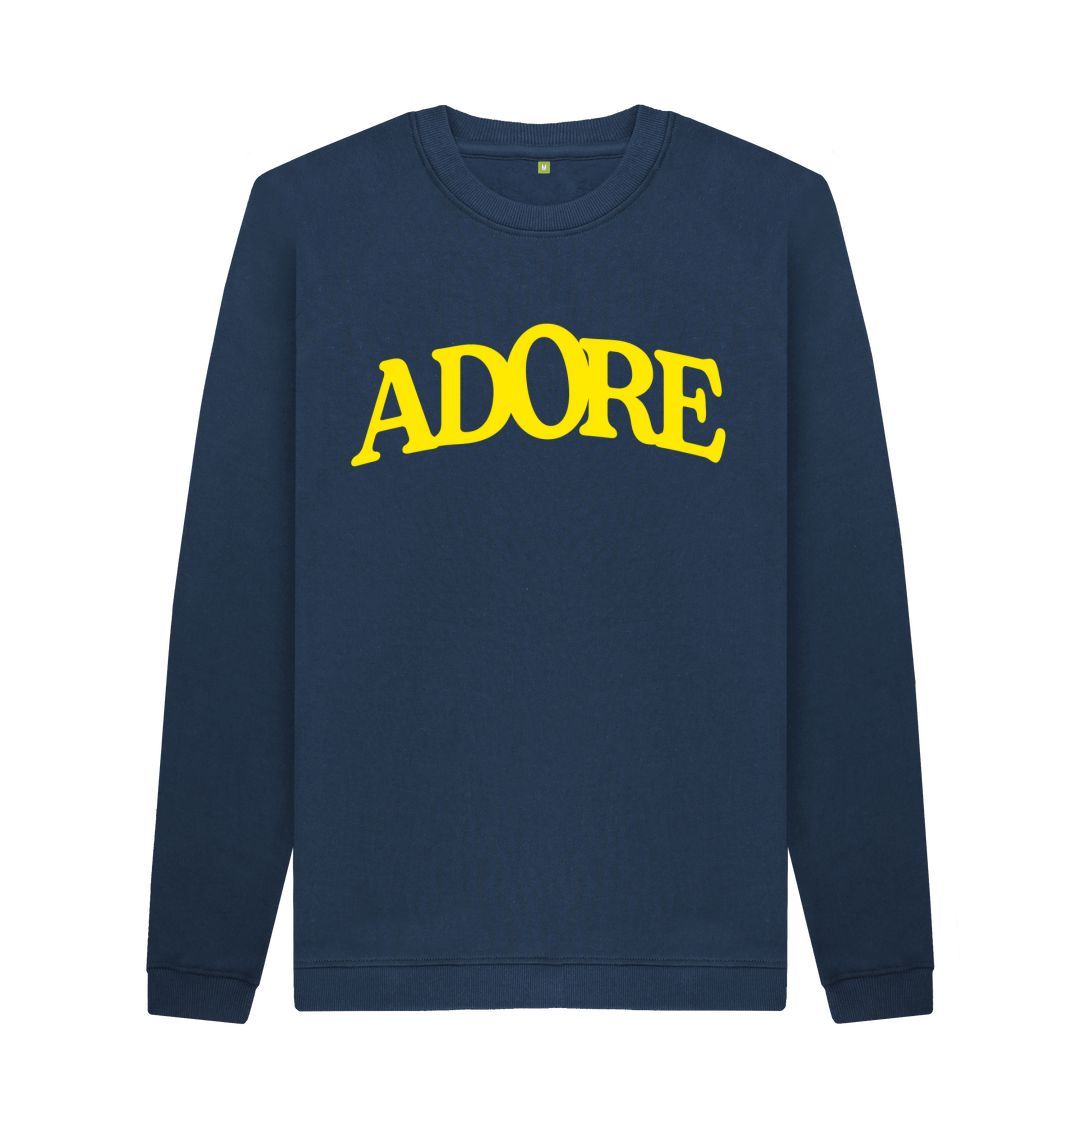 Navy Blue Doobee Adore Me Organic Cotton Sweater